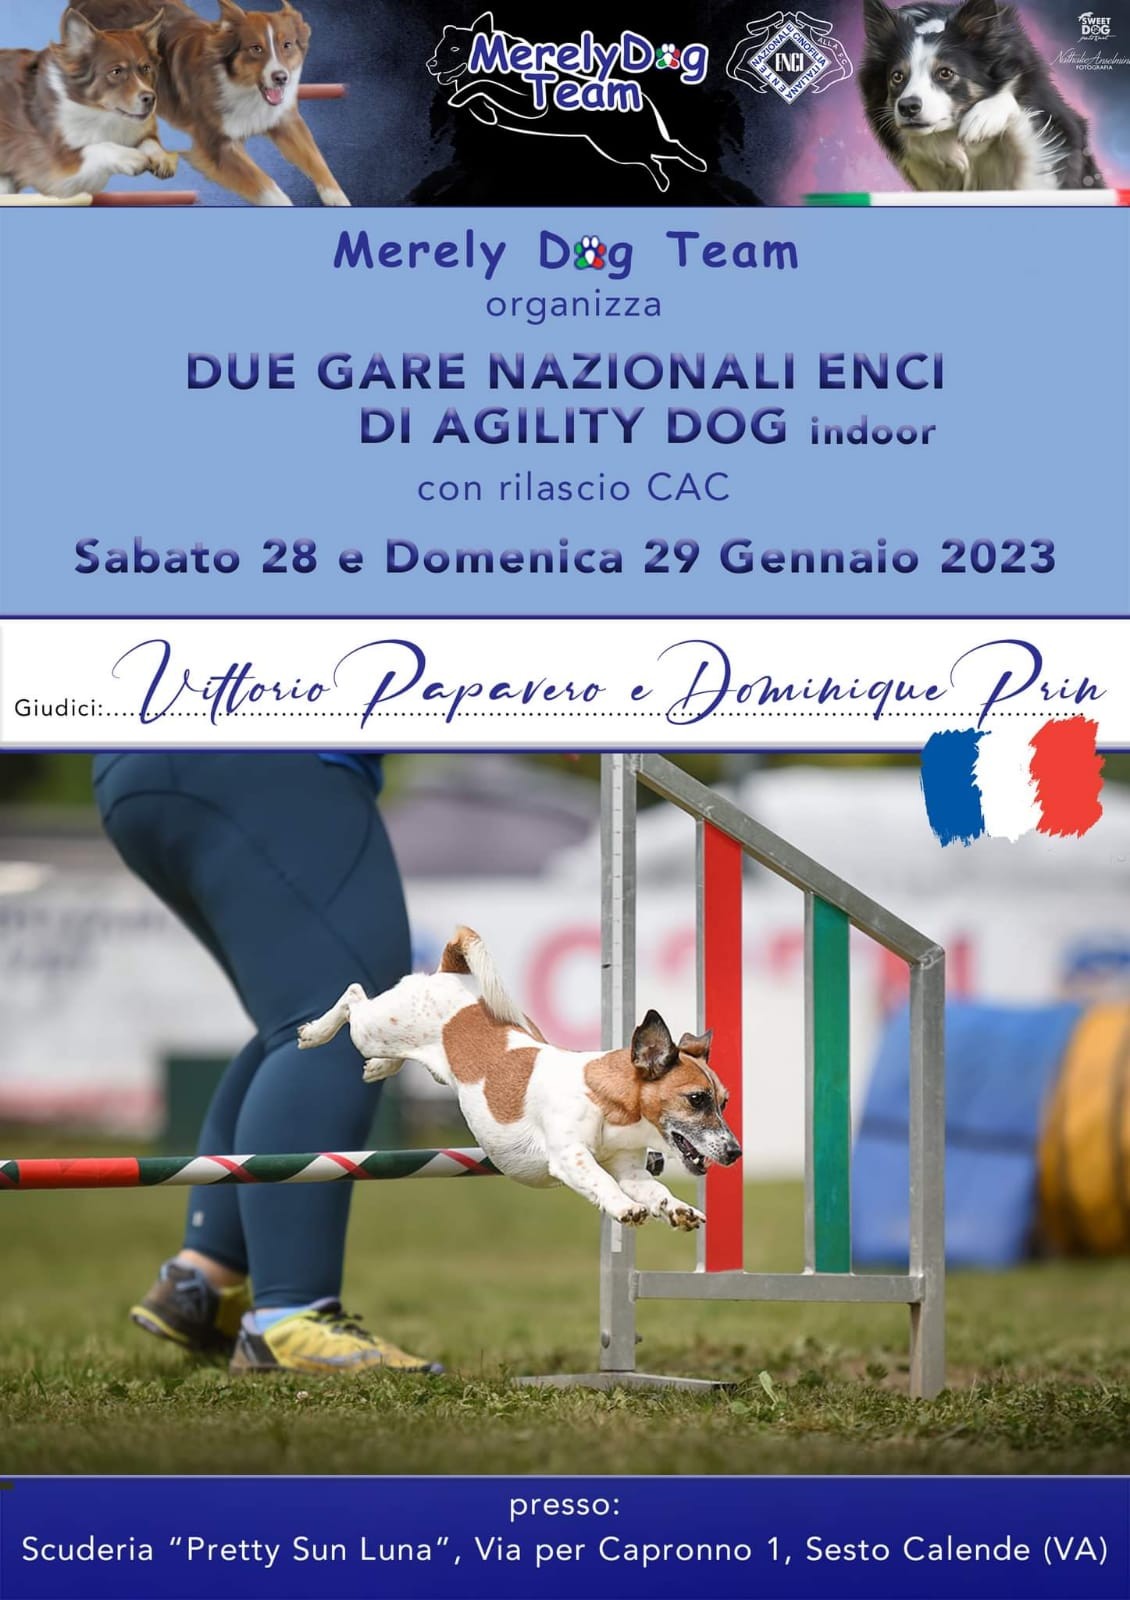 Merely Dog Team organizza Sabato 28 28Gennaio 2023